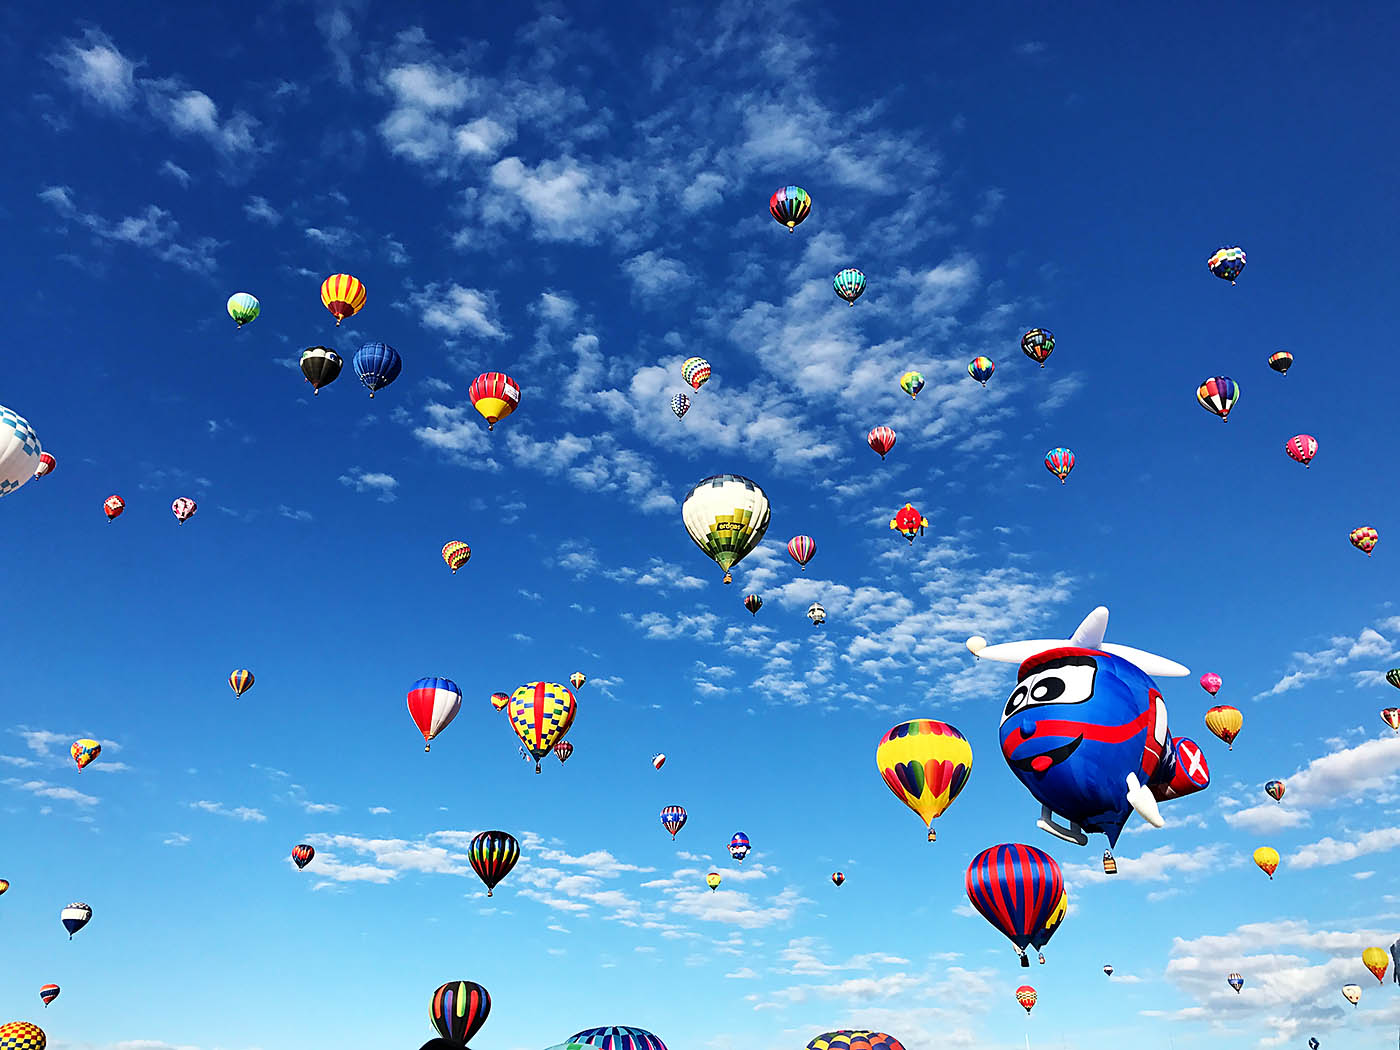 Albuquerque International Balloon Fiesta with AT&T GoPhone